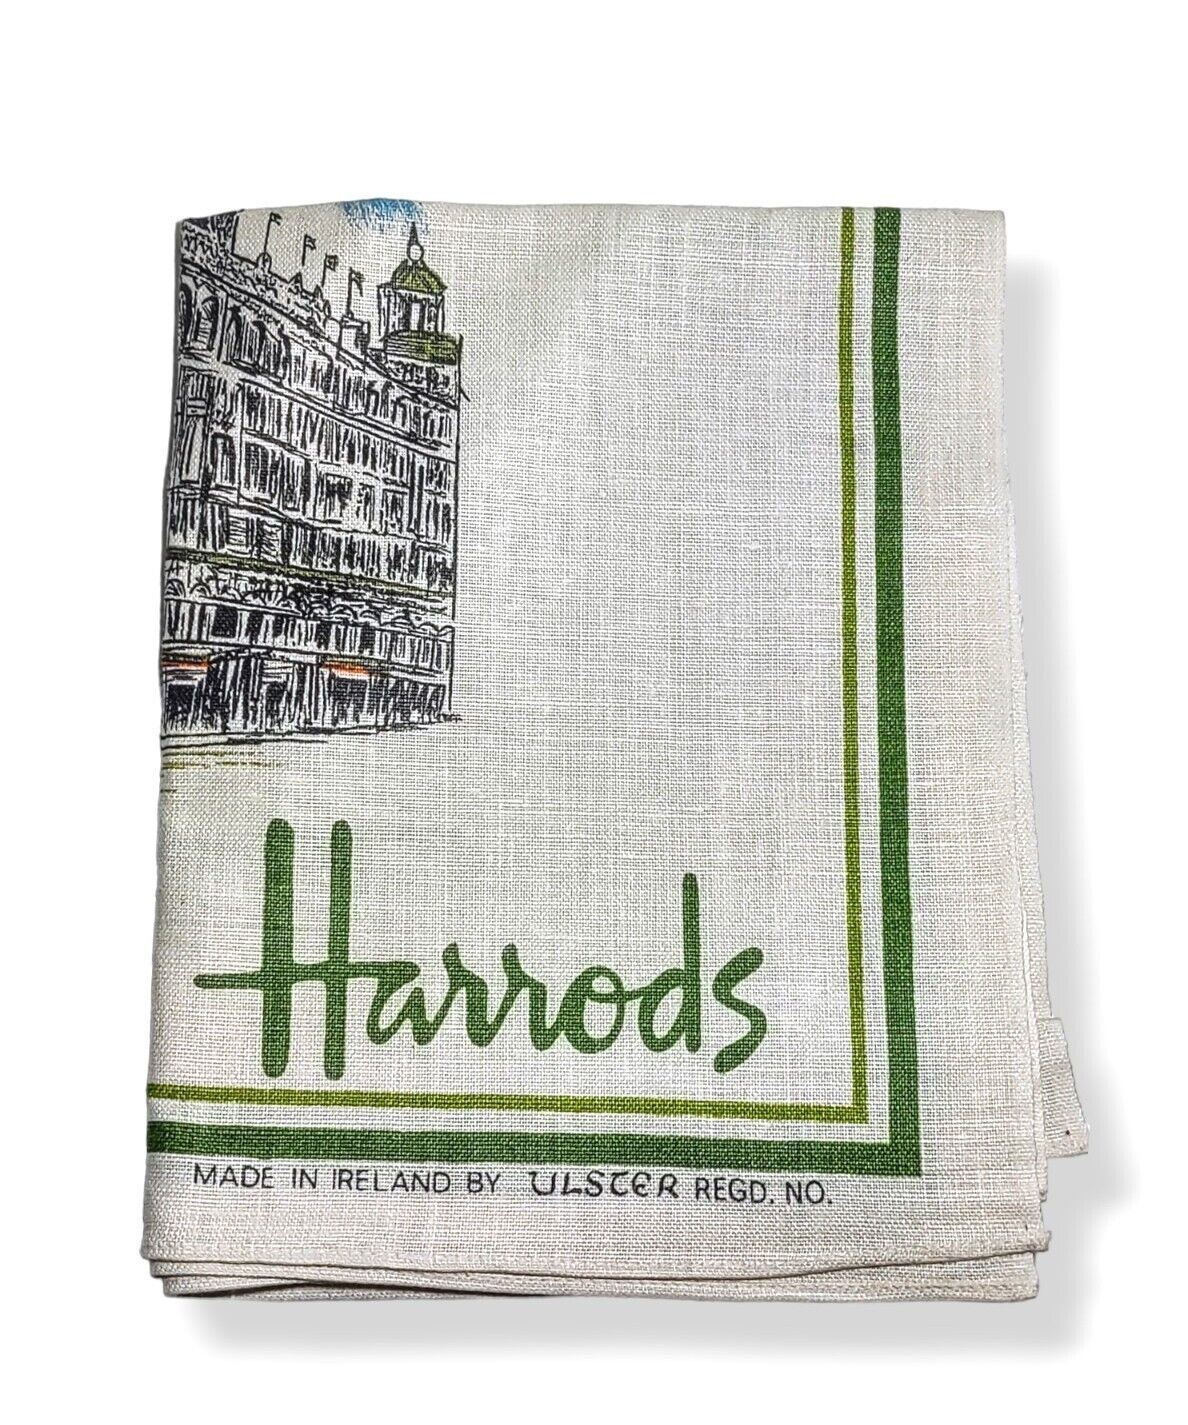 Vtg Harrods Department Store Irish Linen Tea Towel Wall Hanging London England 